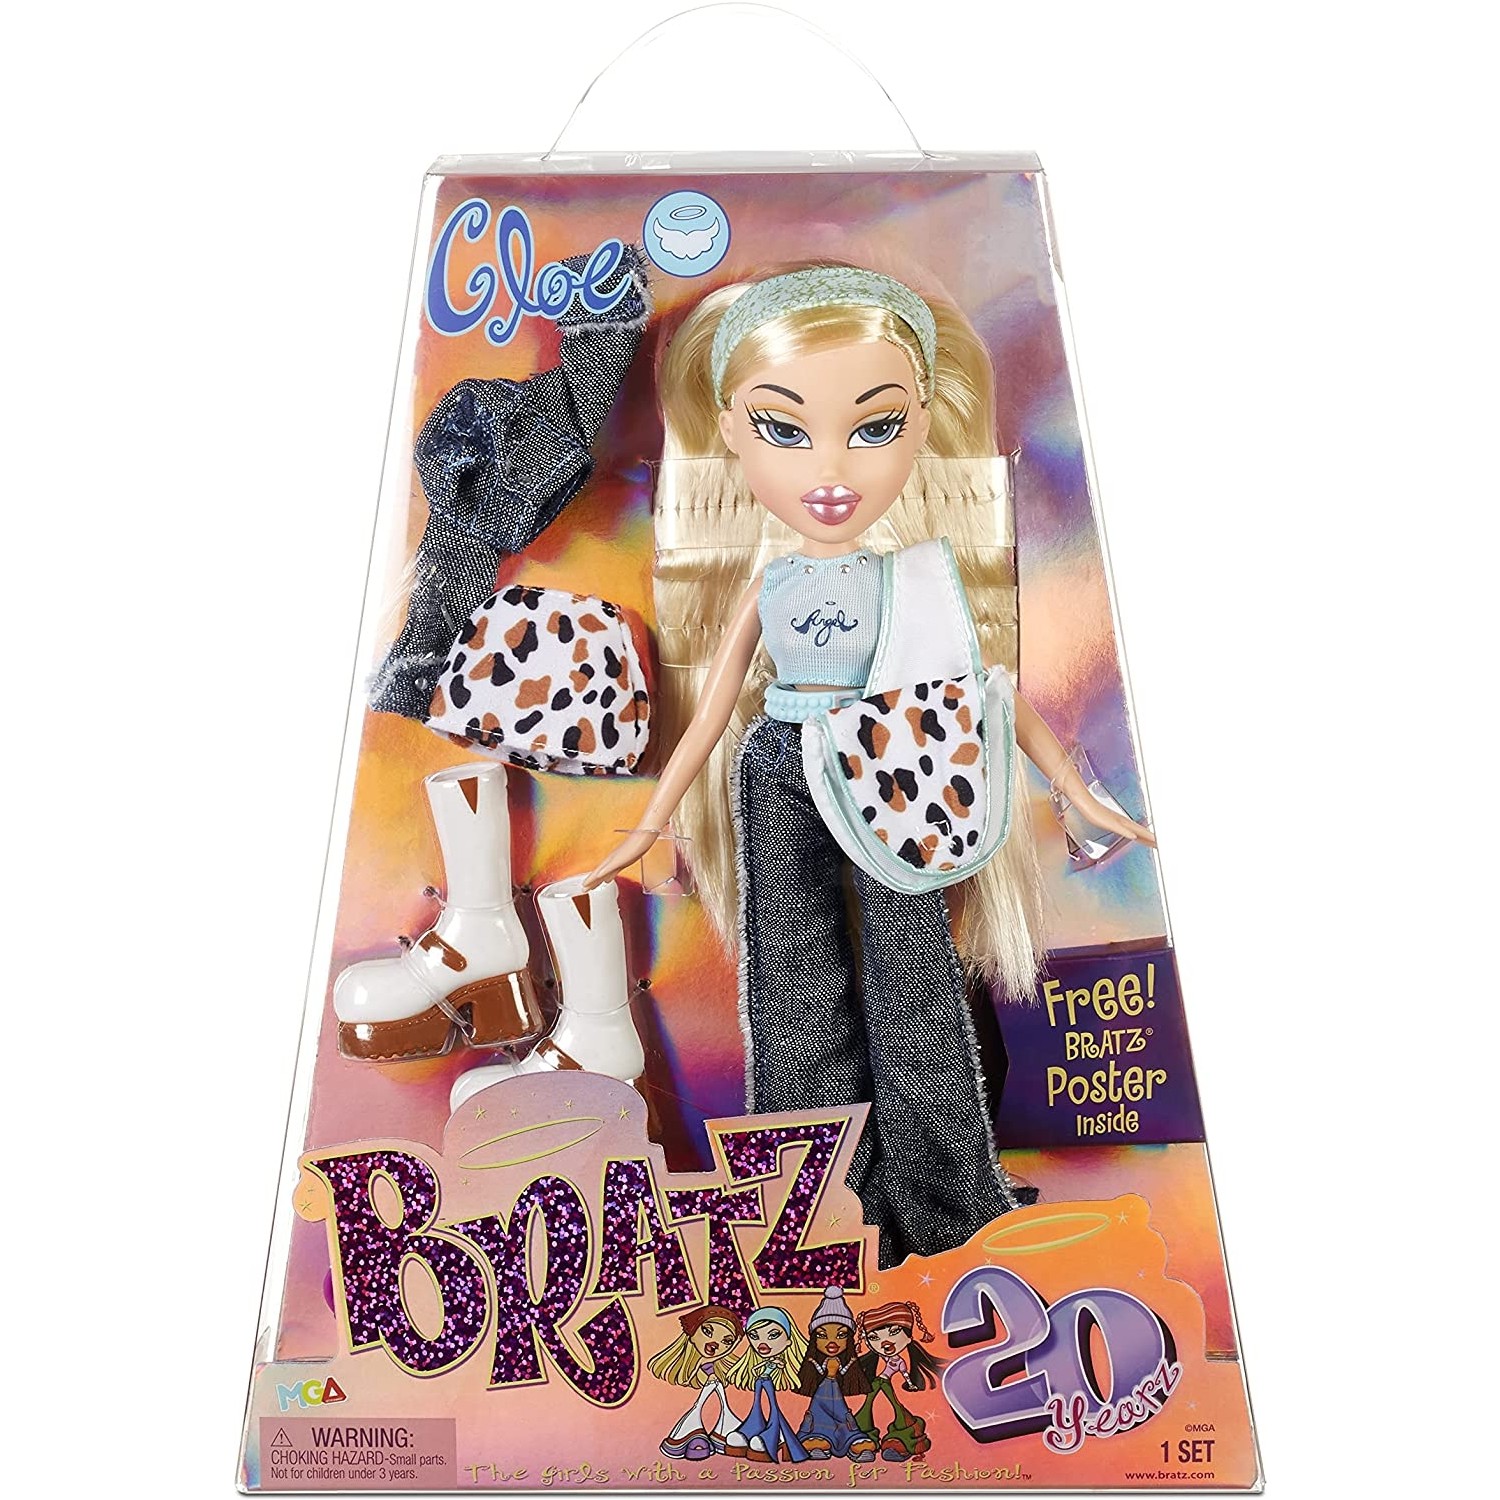 Кукла Barbie Giochi Preziosi с аксессуарами и голографическим плакатом кукла братц кло хлоя из серии настоящий фанк 2003 bratz formal funk cloe